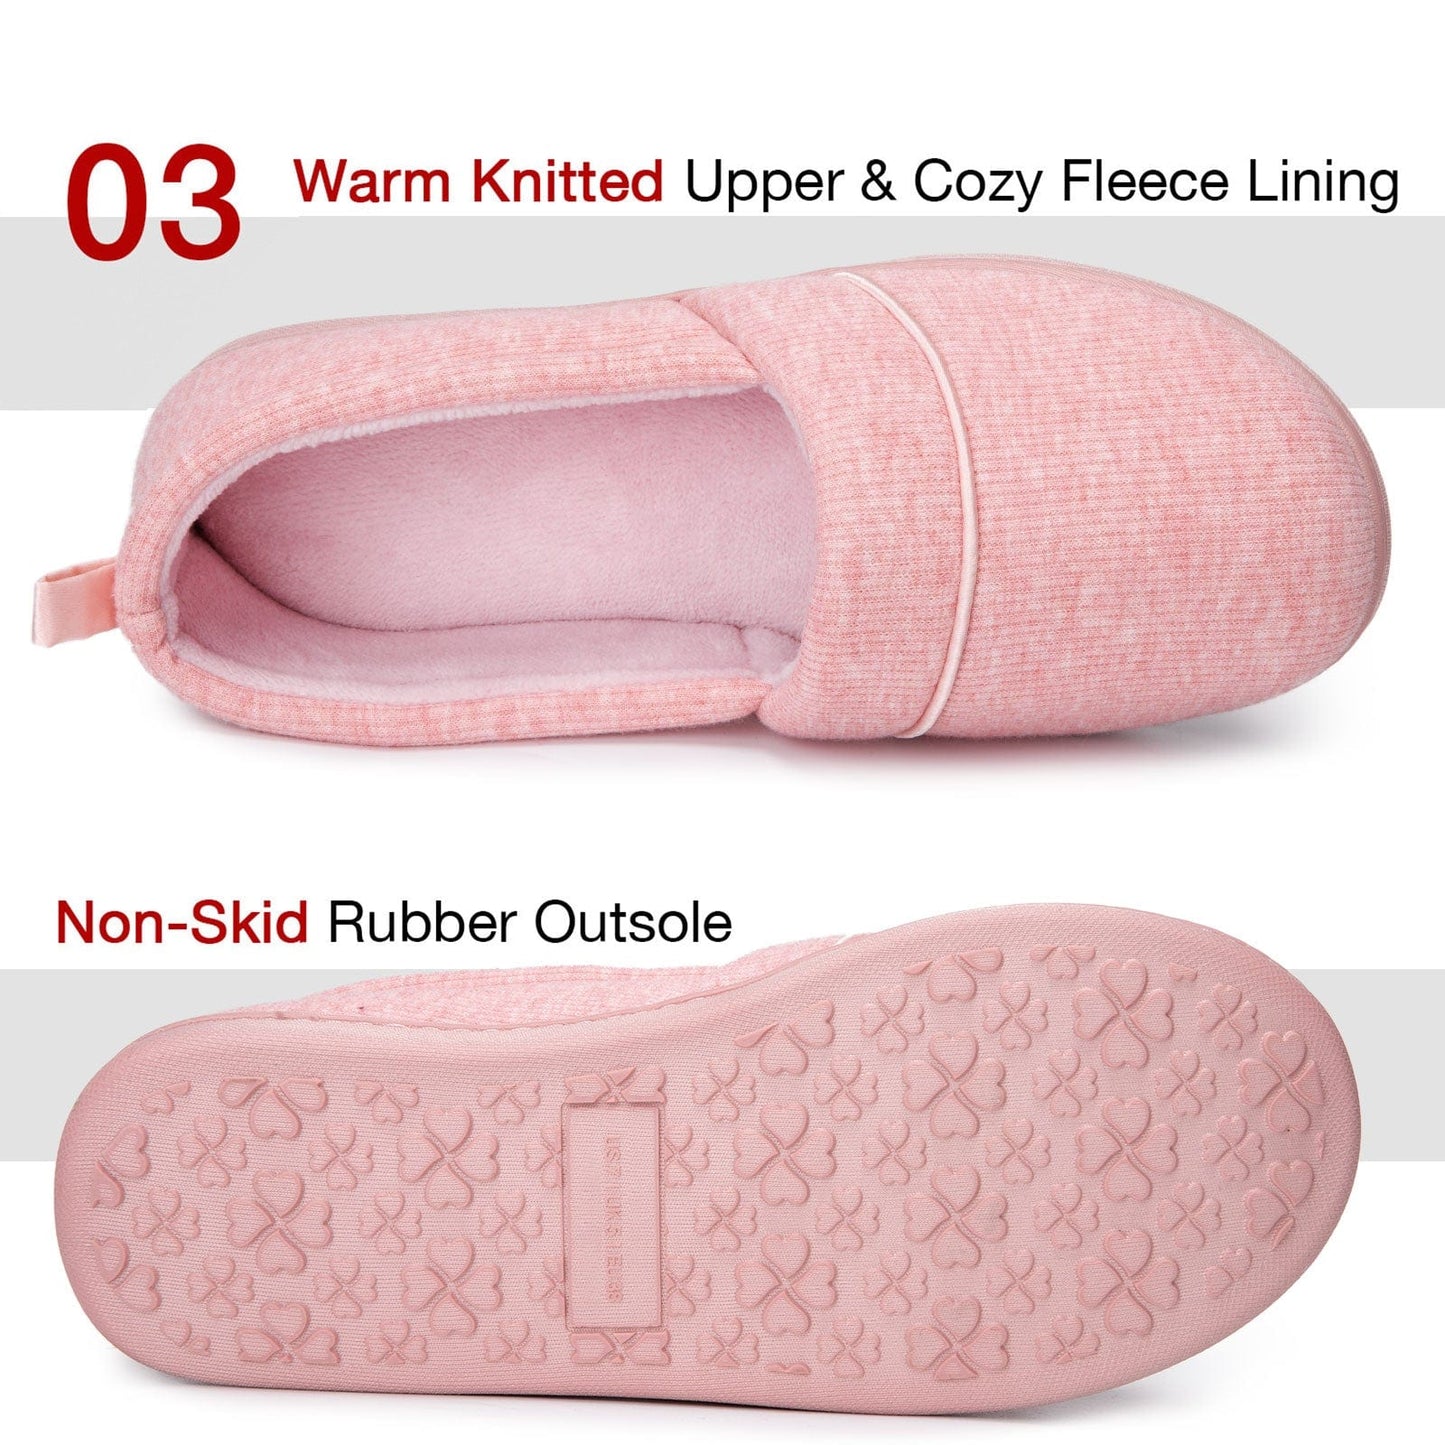 EverFoams Women's Cotton Knit Loafers Slippers